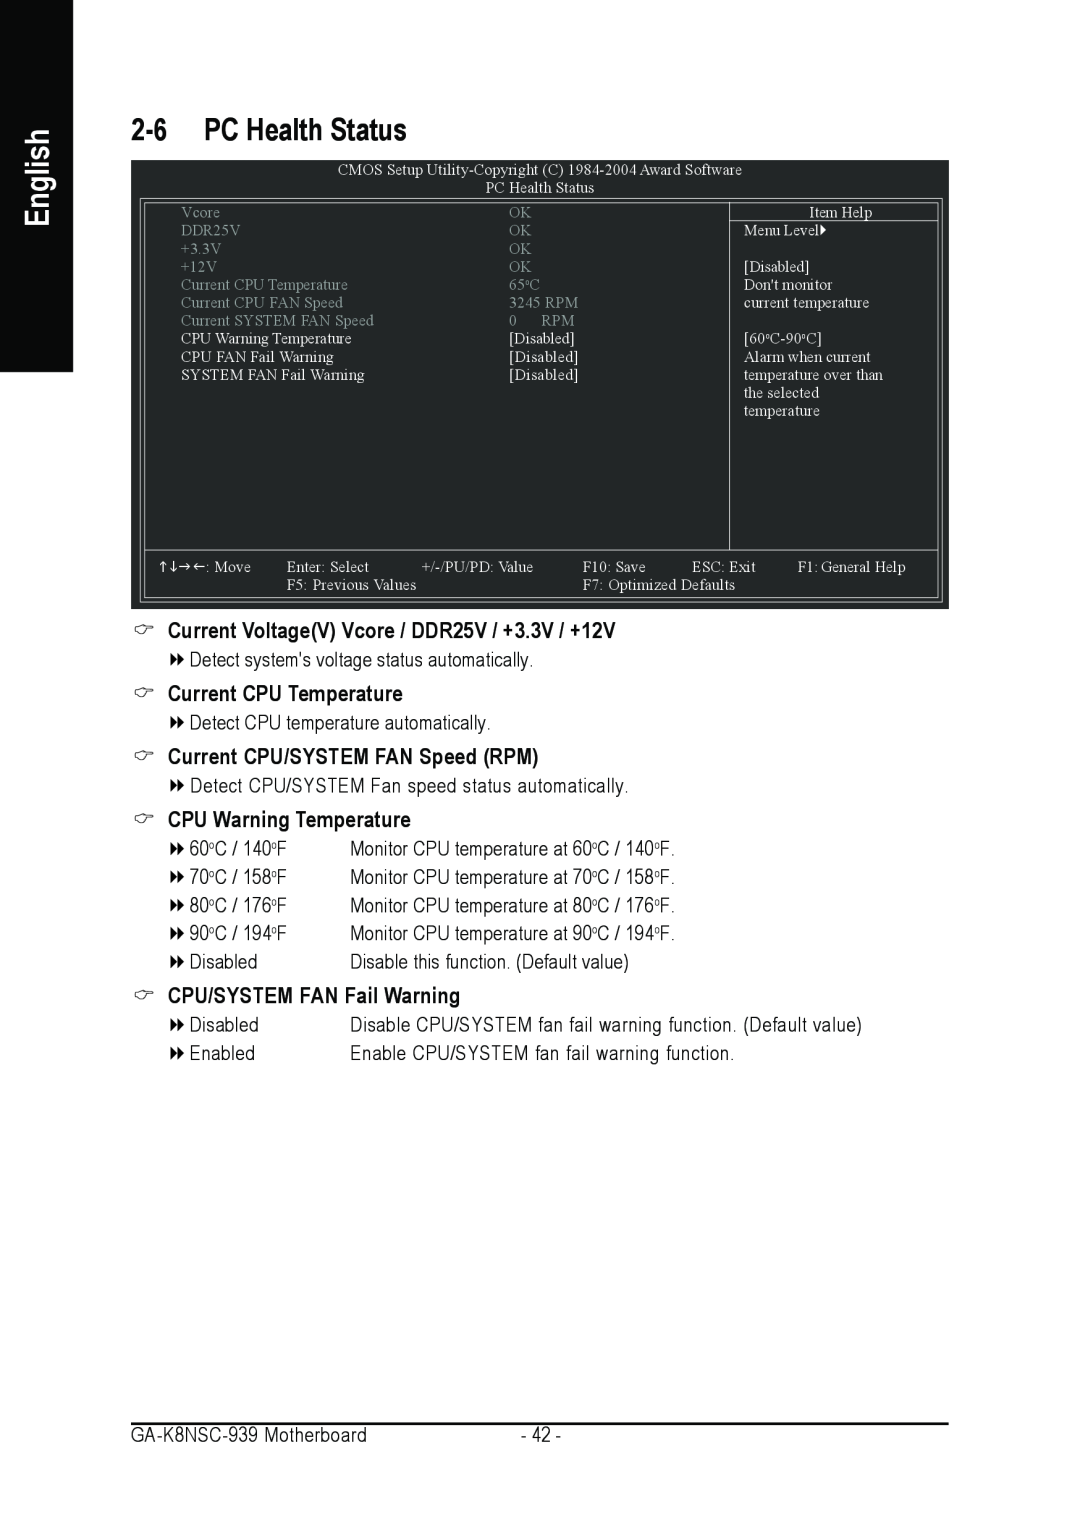 AMD GA-K8NSC-939 PC Health Status, Current VoltageV Vcore / DDR25V / +3.3V / +12V, Current CPU Temperature, English 